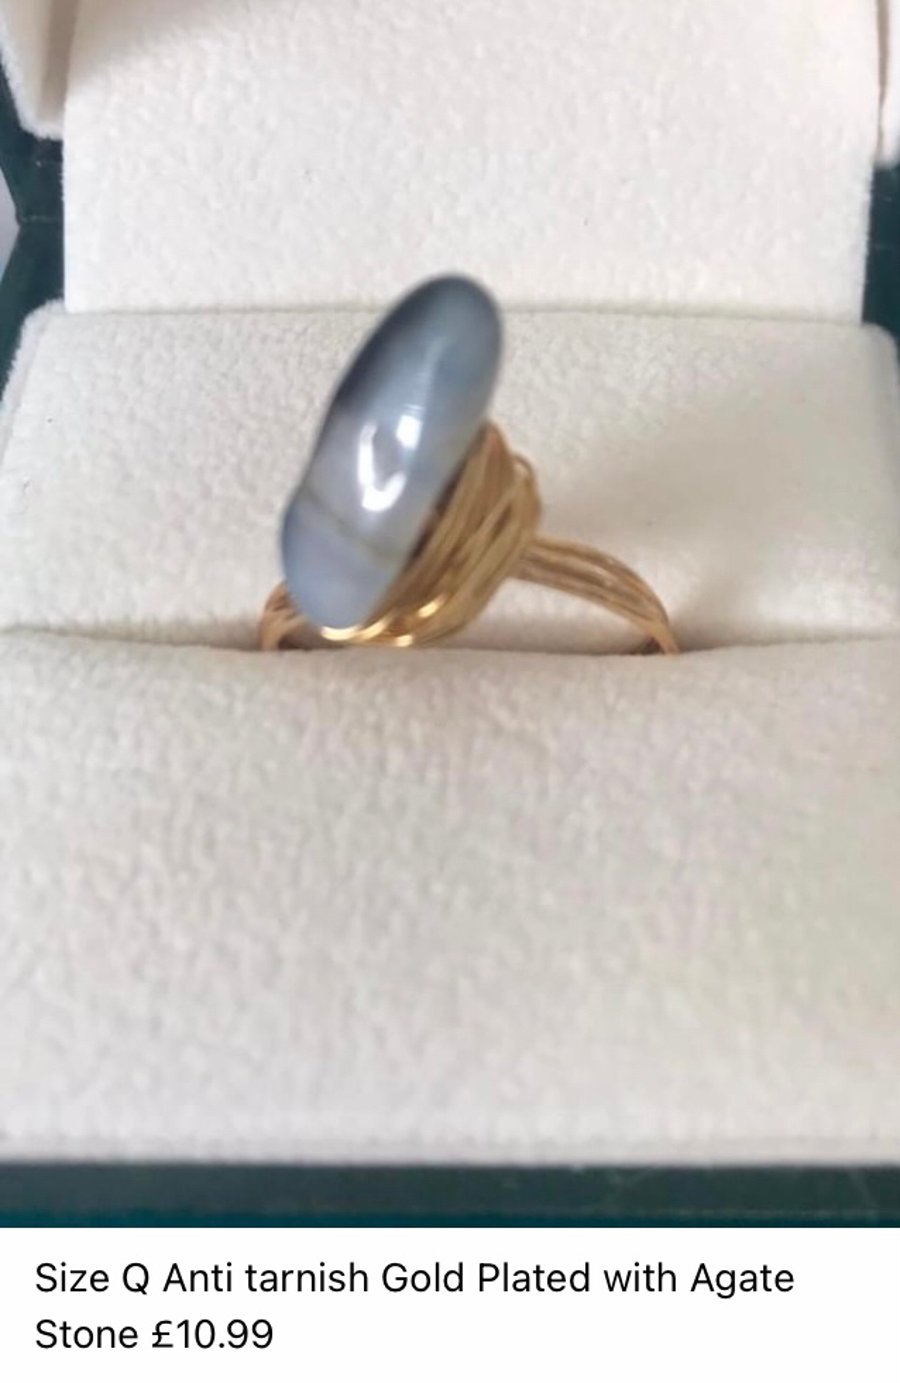 Agate Statement Ring - Plus Size Q - Anti Tarnish Gold Plated